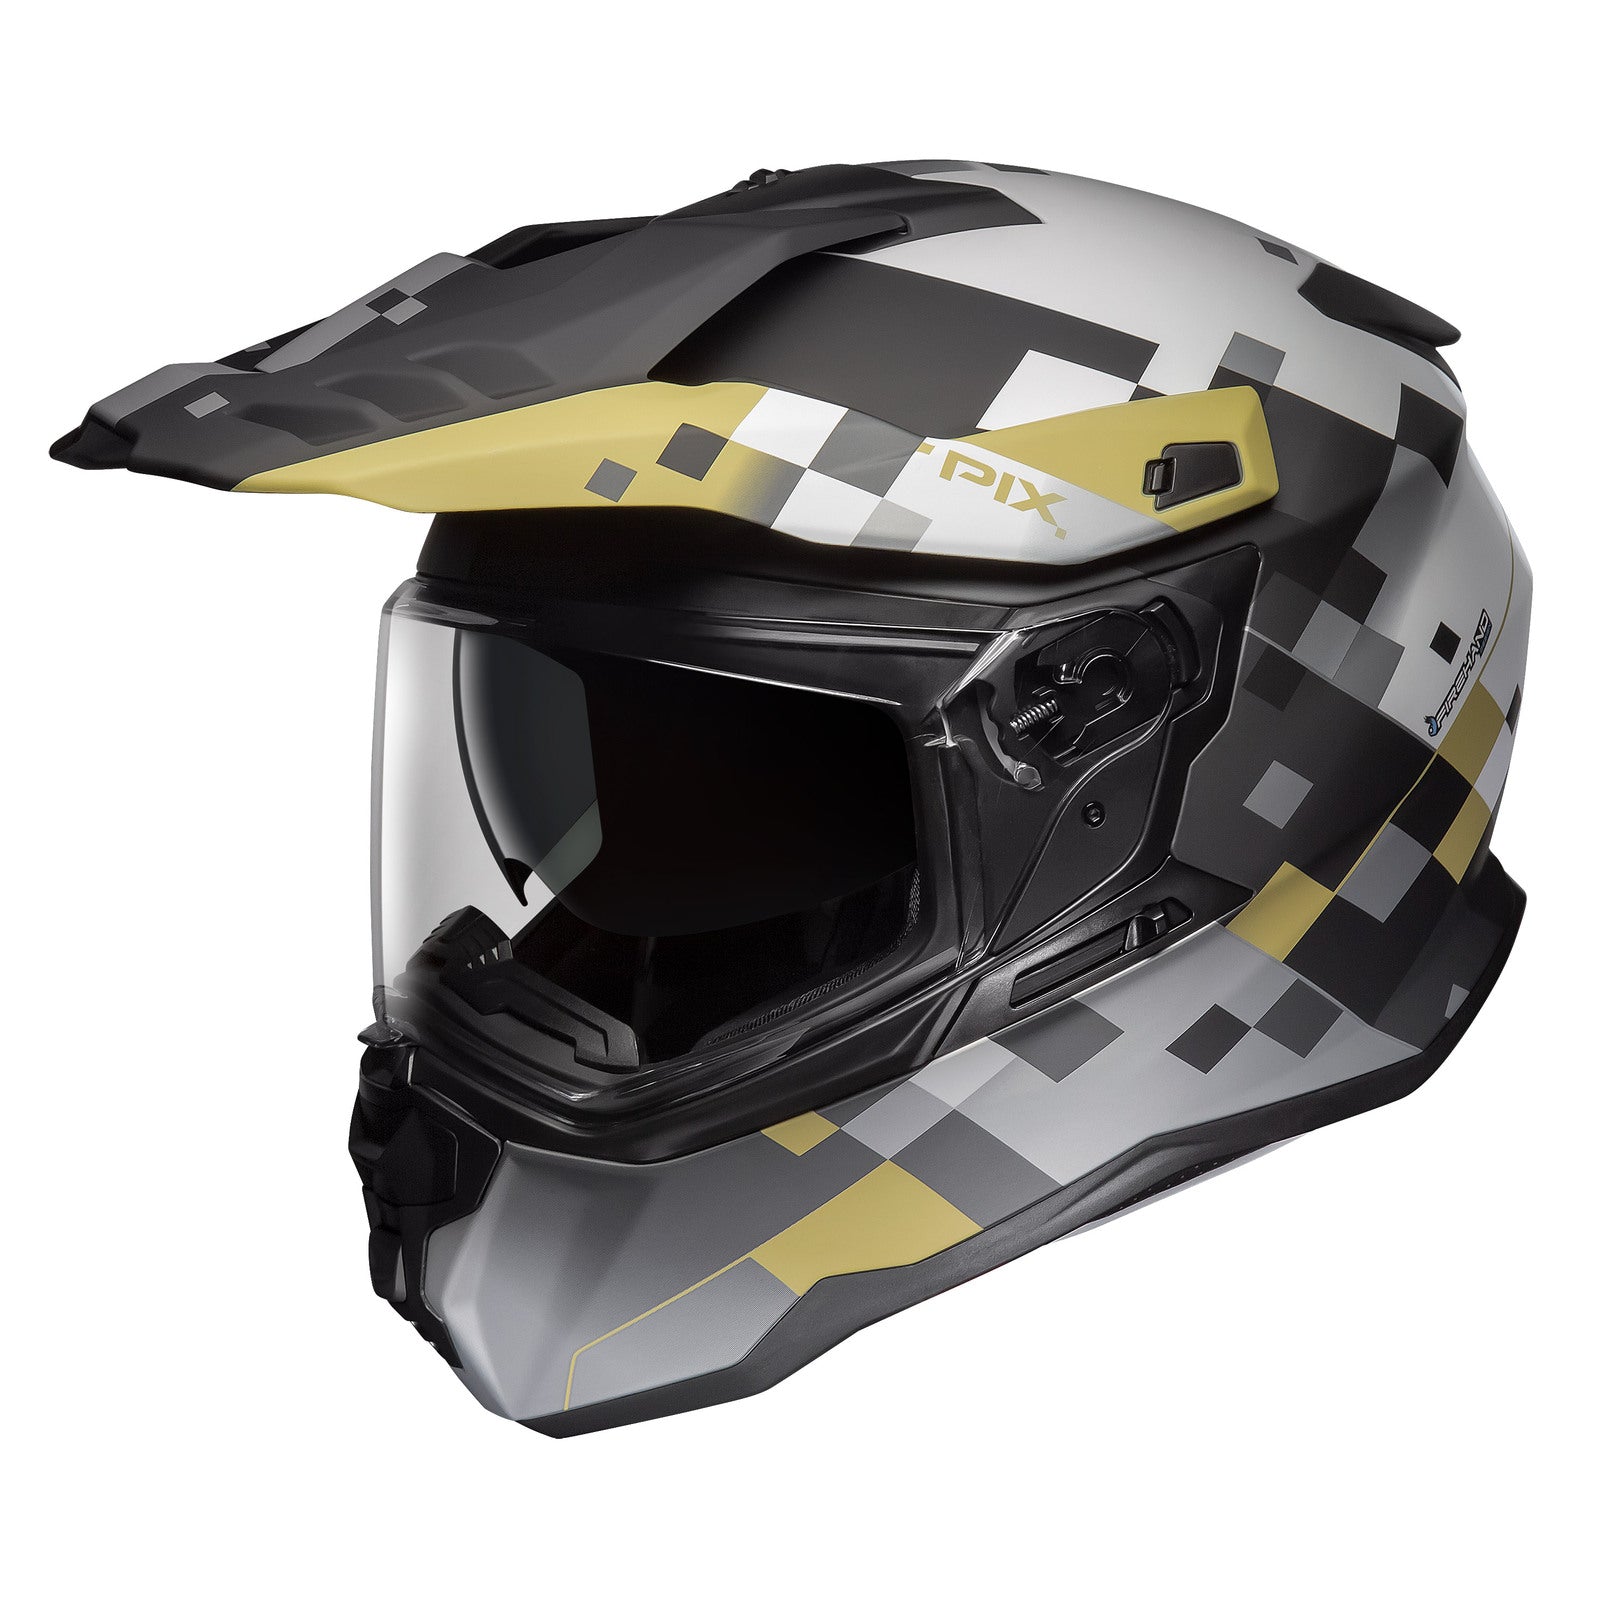 M2R Hybrid Helmet - Pix PC-9F